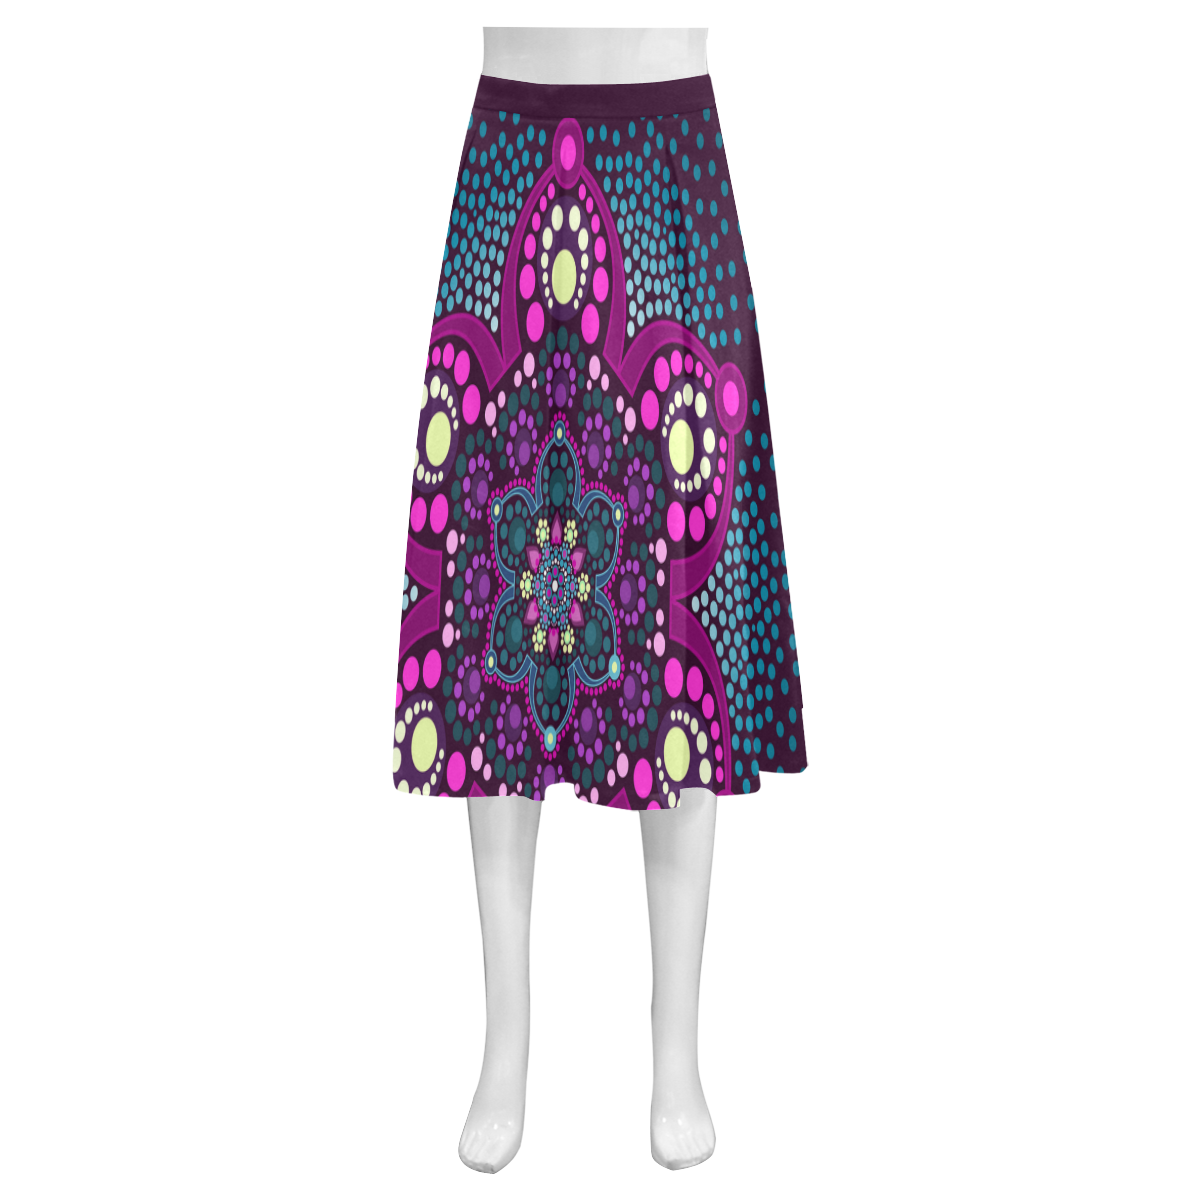 Dot painting meets mandalas 16 - 3 Mnemosyne Women's Crepe Skirt (Model D16)